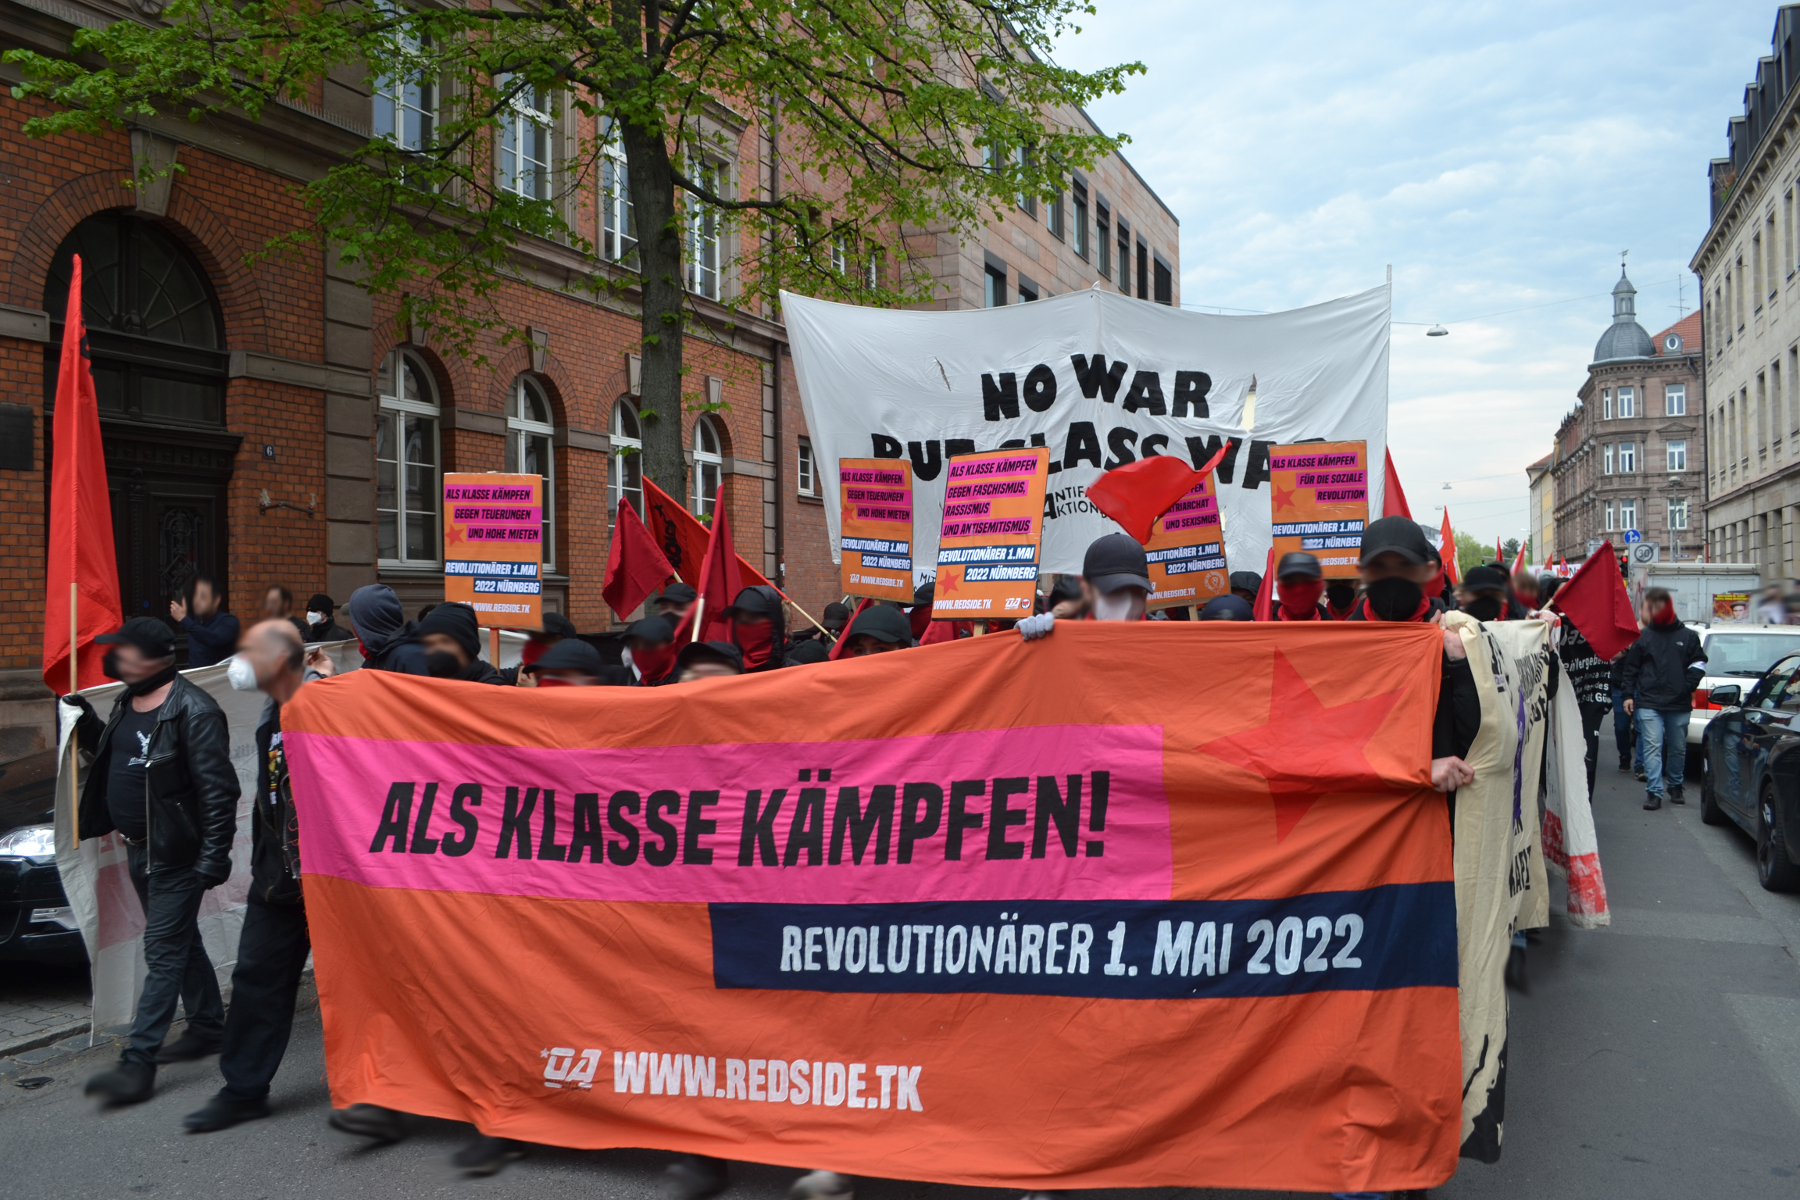 Revolutionäre 1. Mai Demonstration in Nürnberg. Foto: Organisierte Autonomie